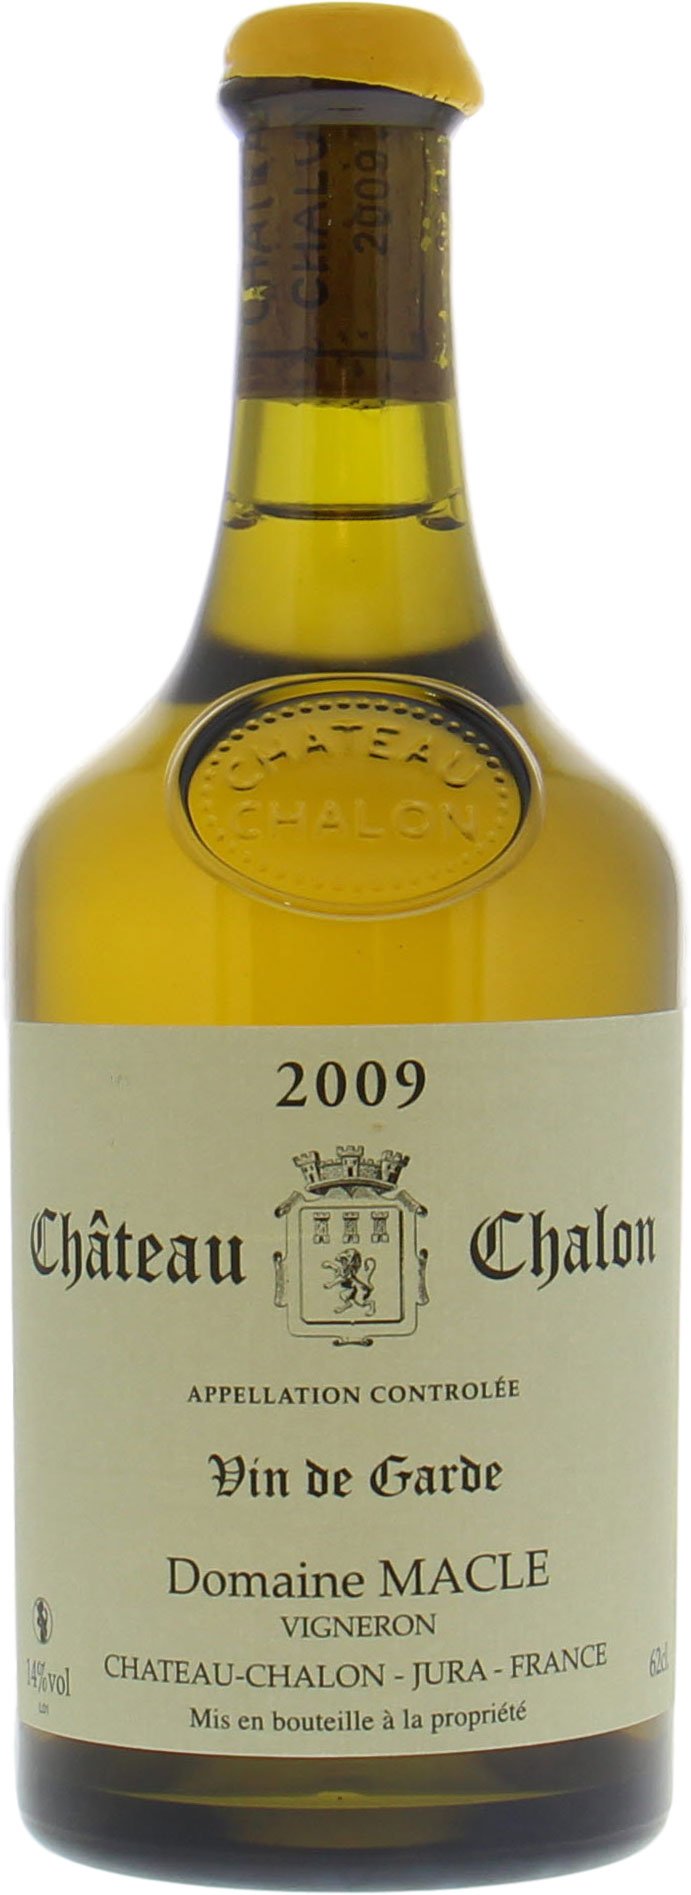 Domaine Macle - Château Chalon 2009